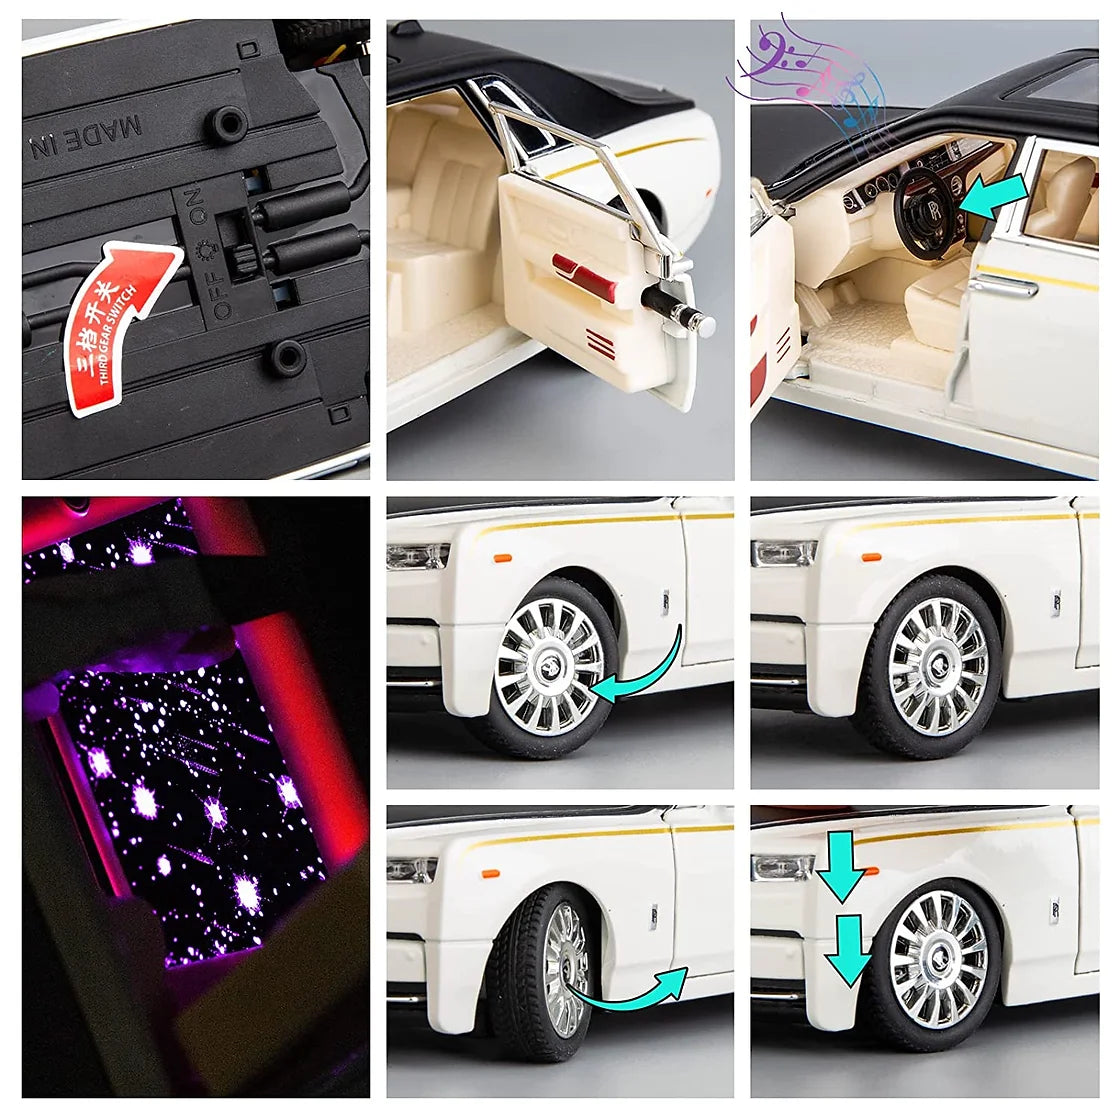 Rolls Royce Model 1:24 Scale Model Die cast Metal Pullback Toy car with Openable Doors & Light(White&Black)